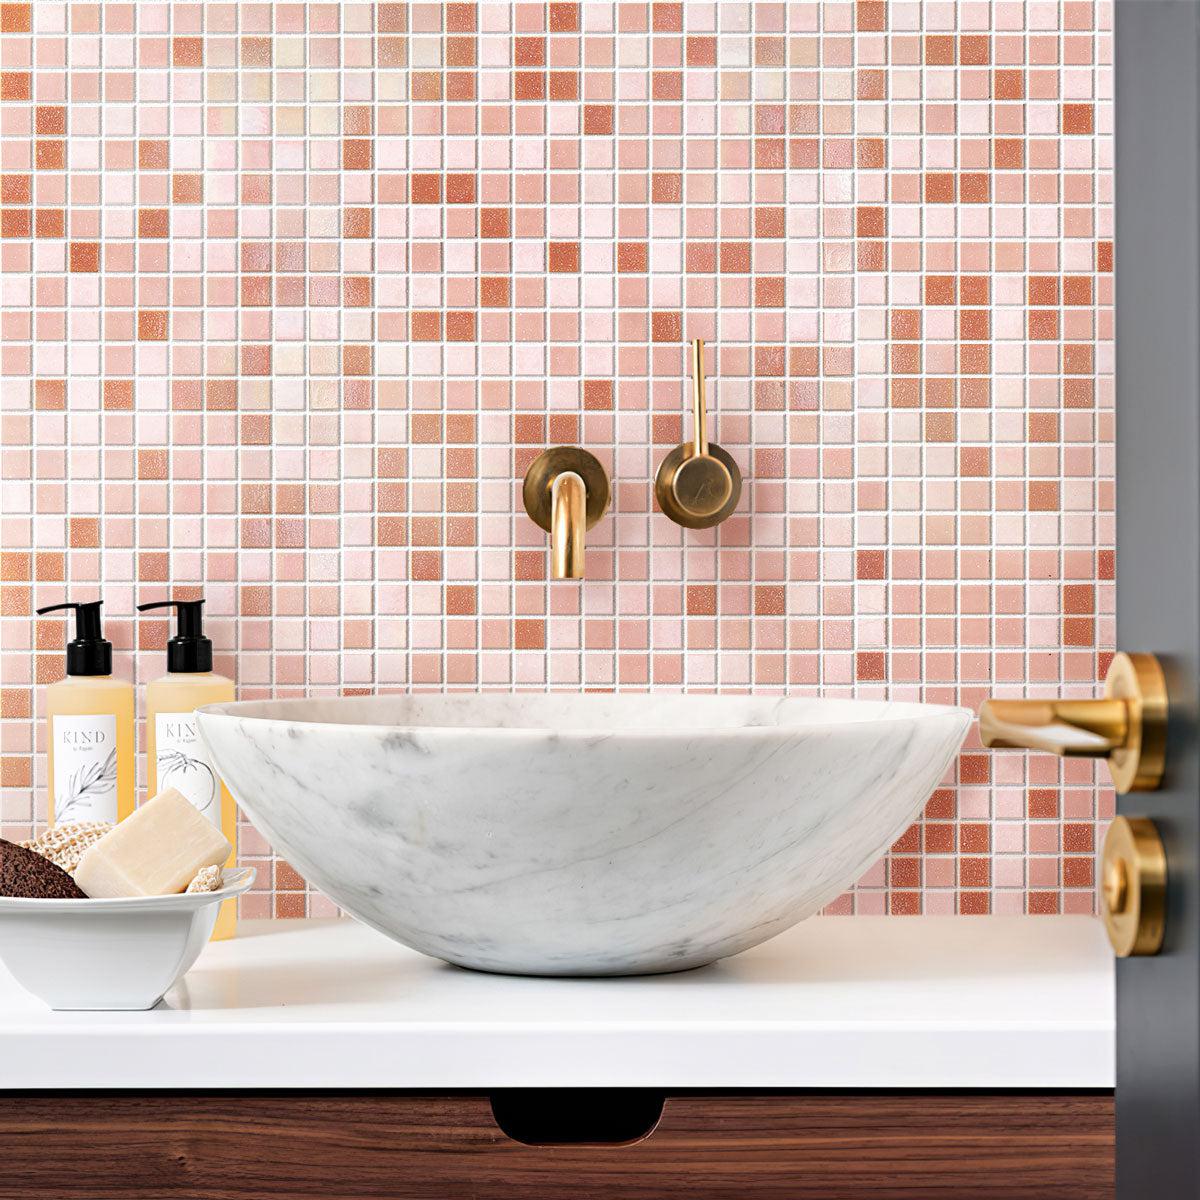 Soft Rose Mixed Squares Glass Tile adorn the elegant bathroom walls